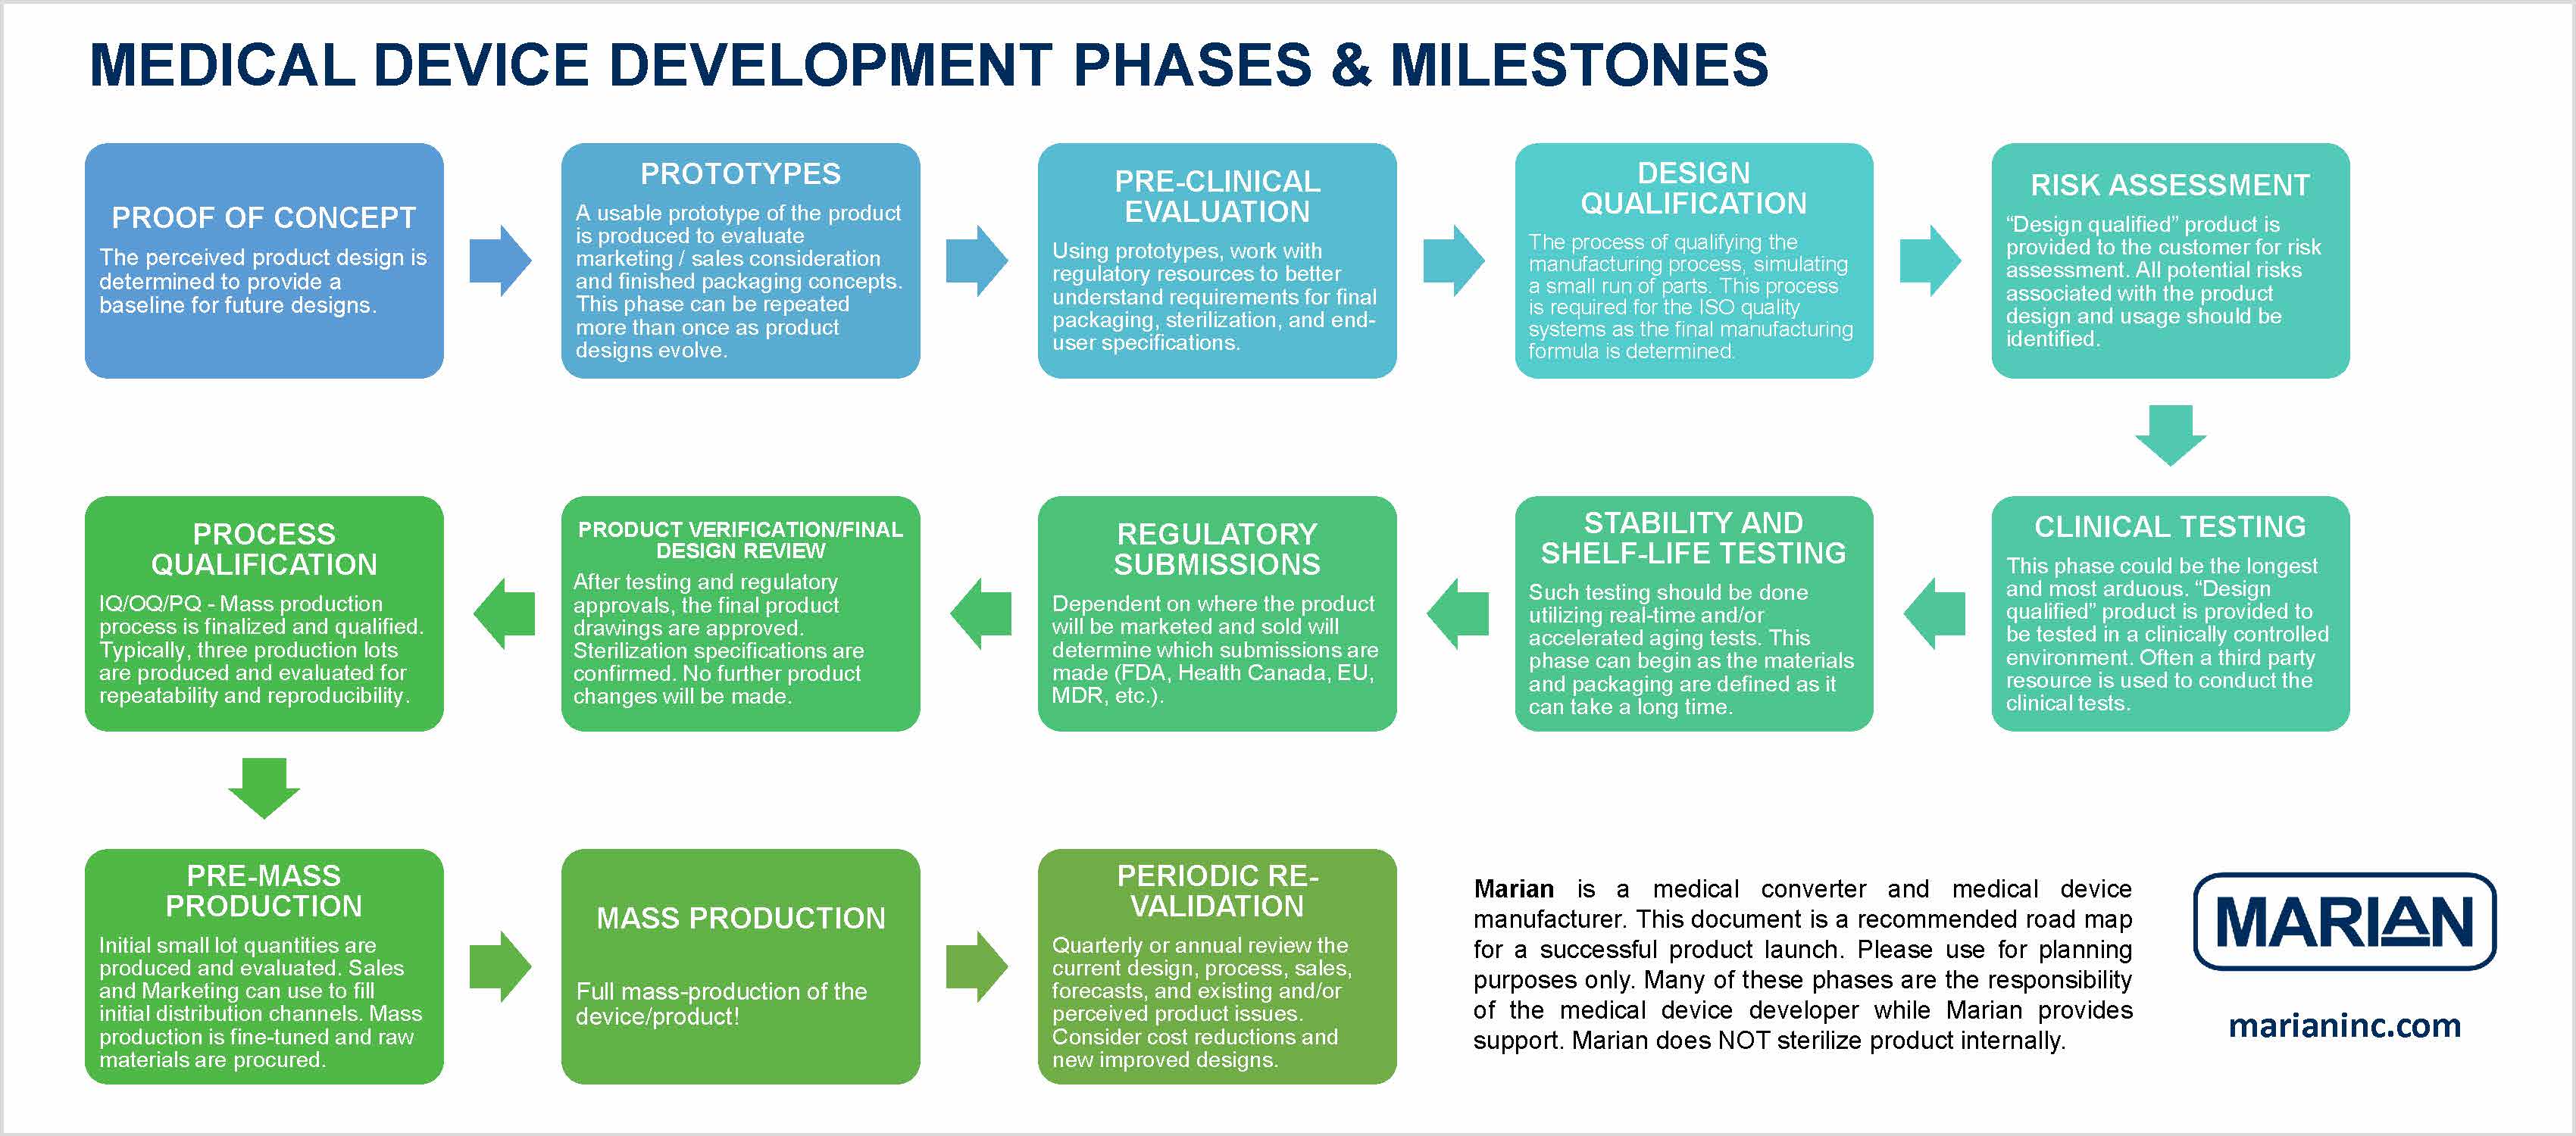 Medical Device Project Development Timeline FINAL